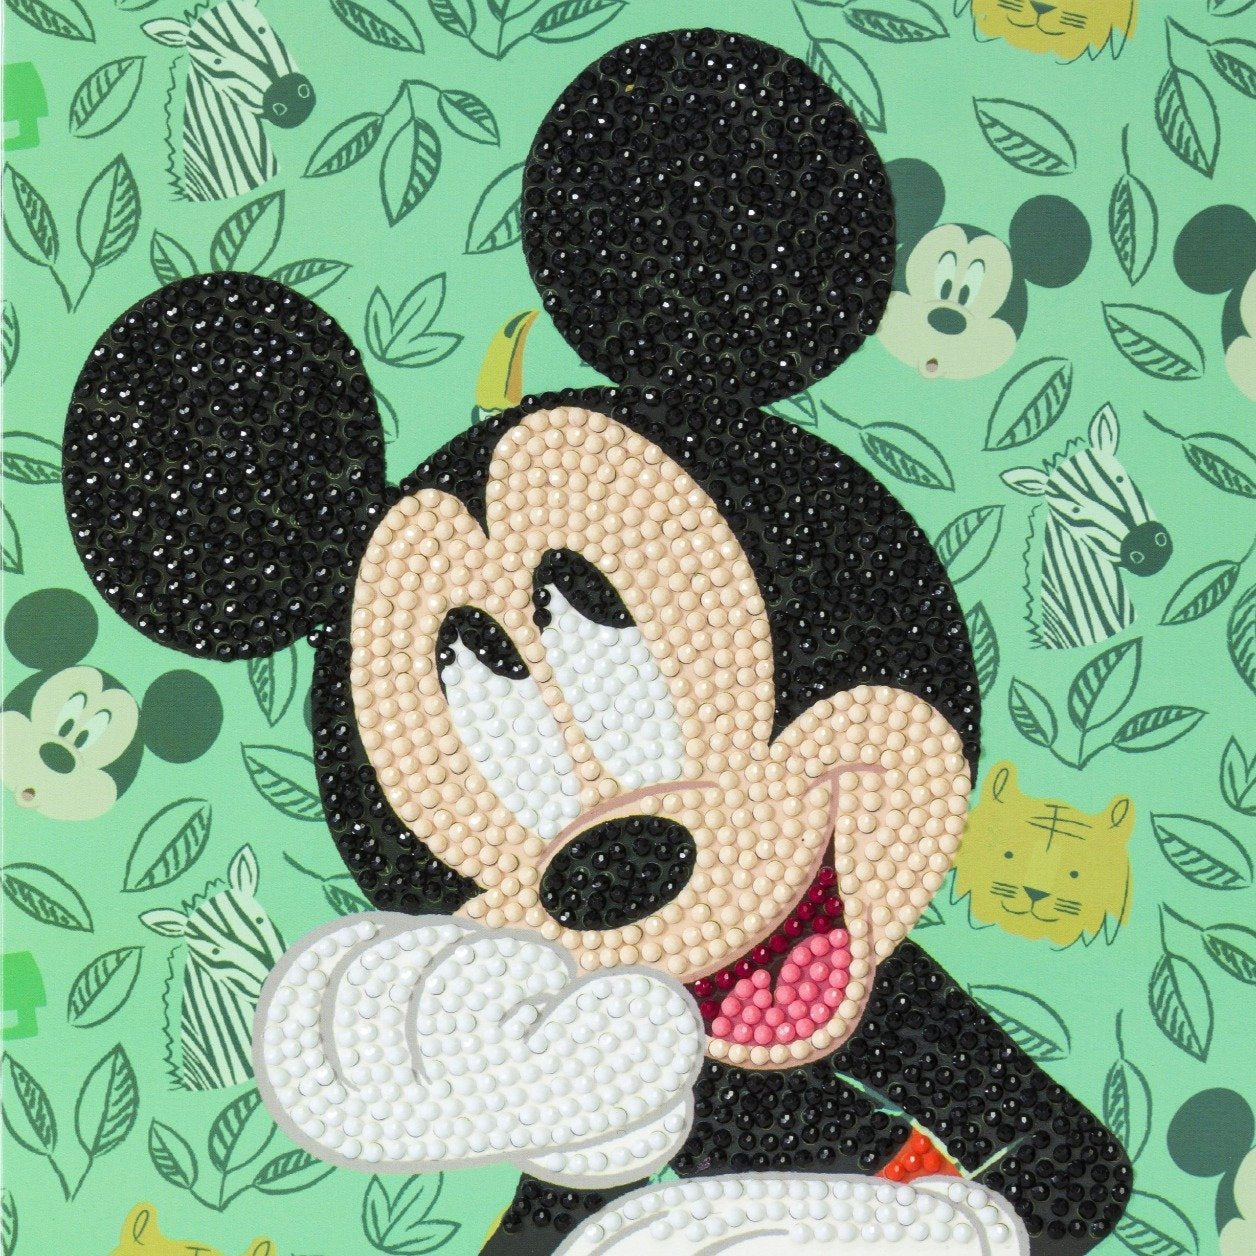 CCK-DNY805: Happy Mickey, 18x18cm Crystal Art Card